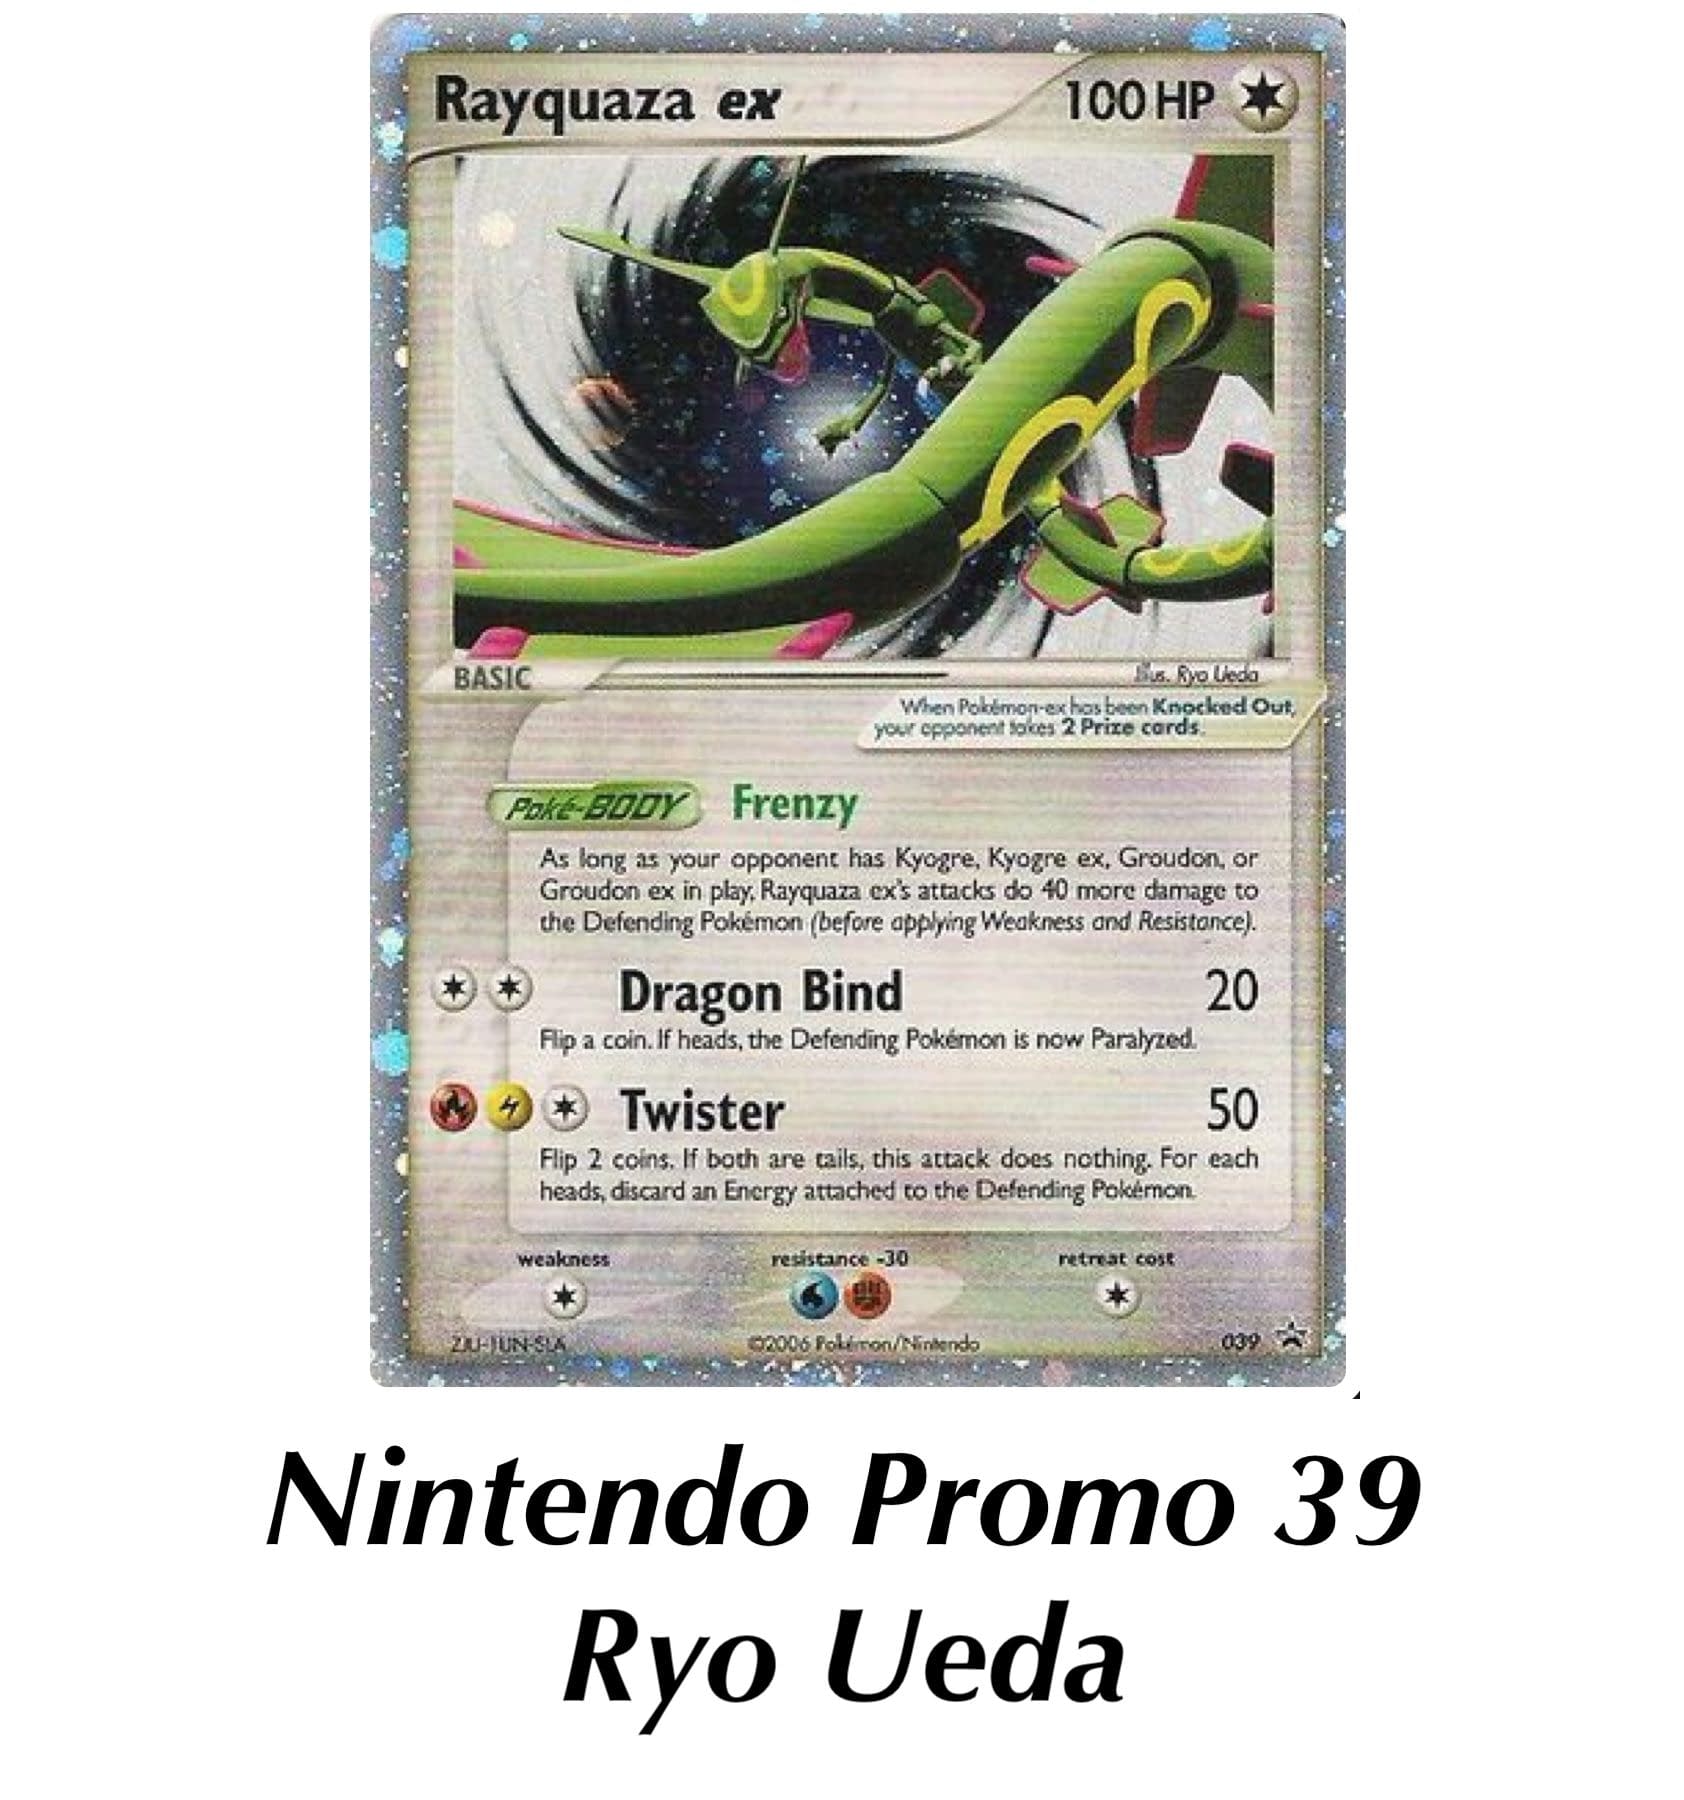 legendary pokemon rayquaza card